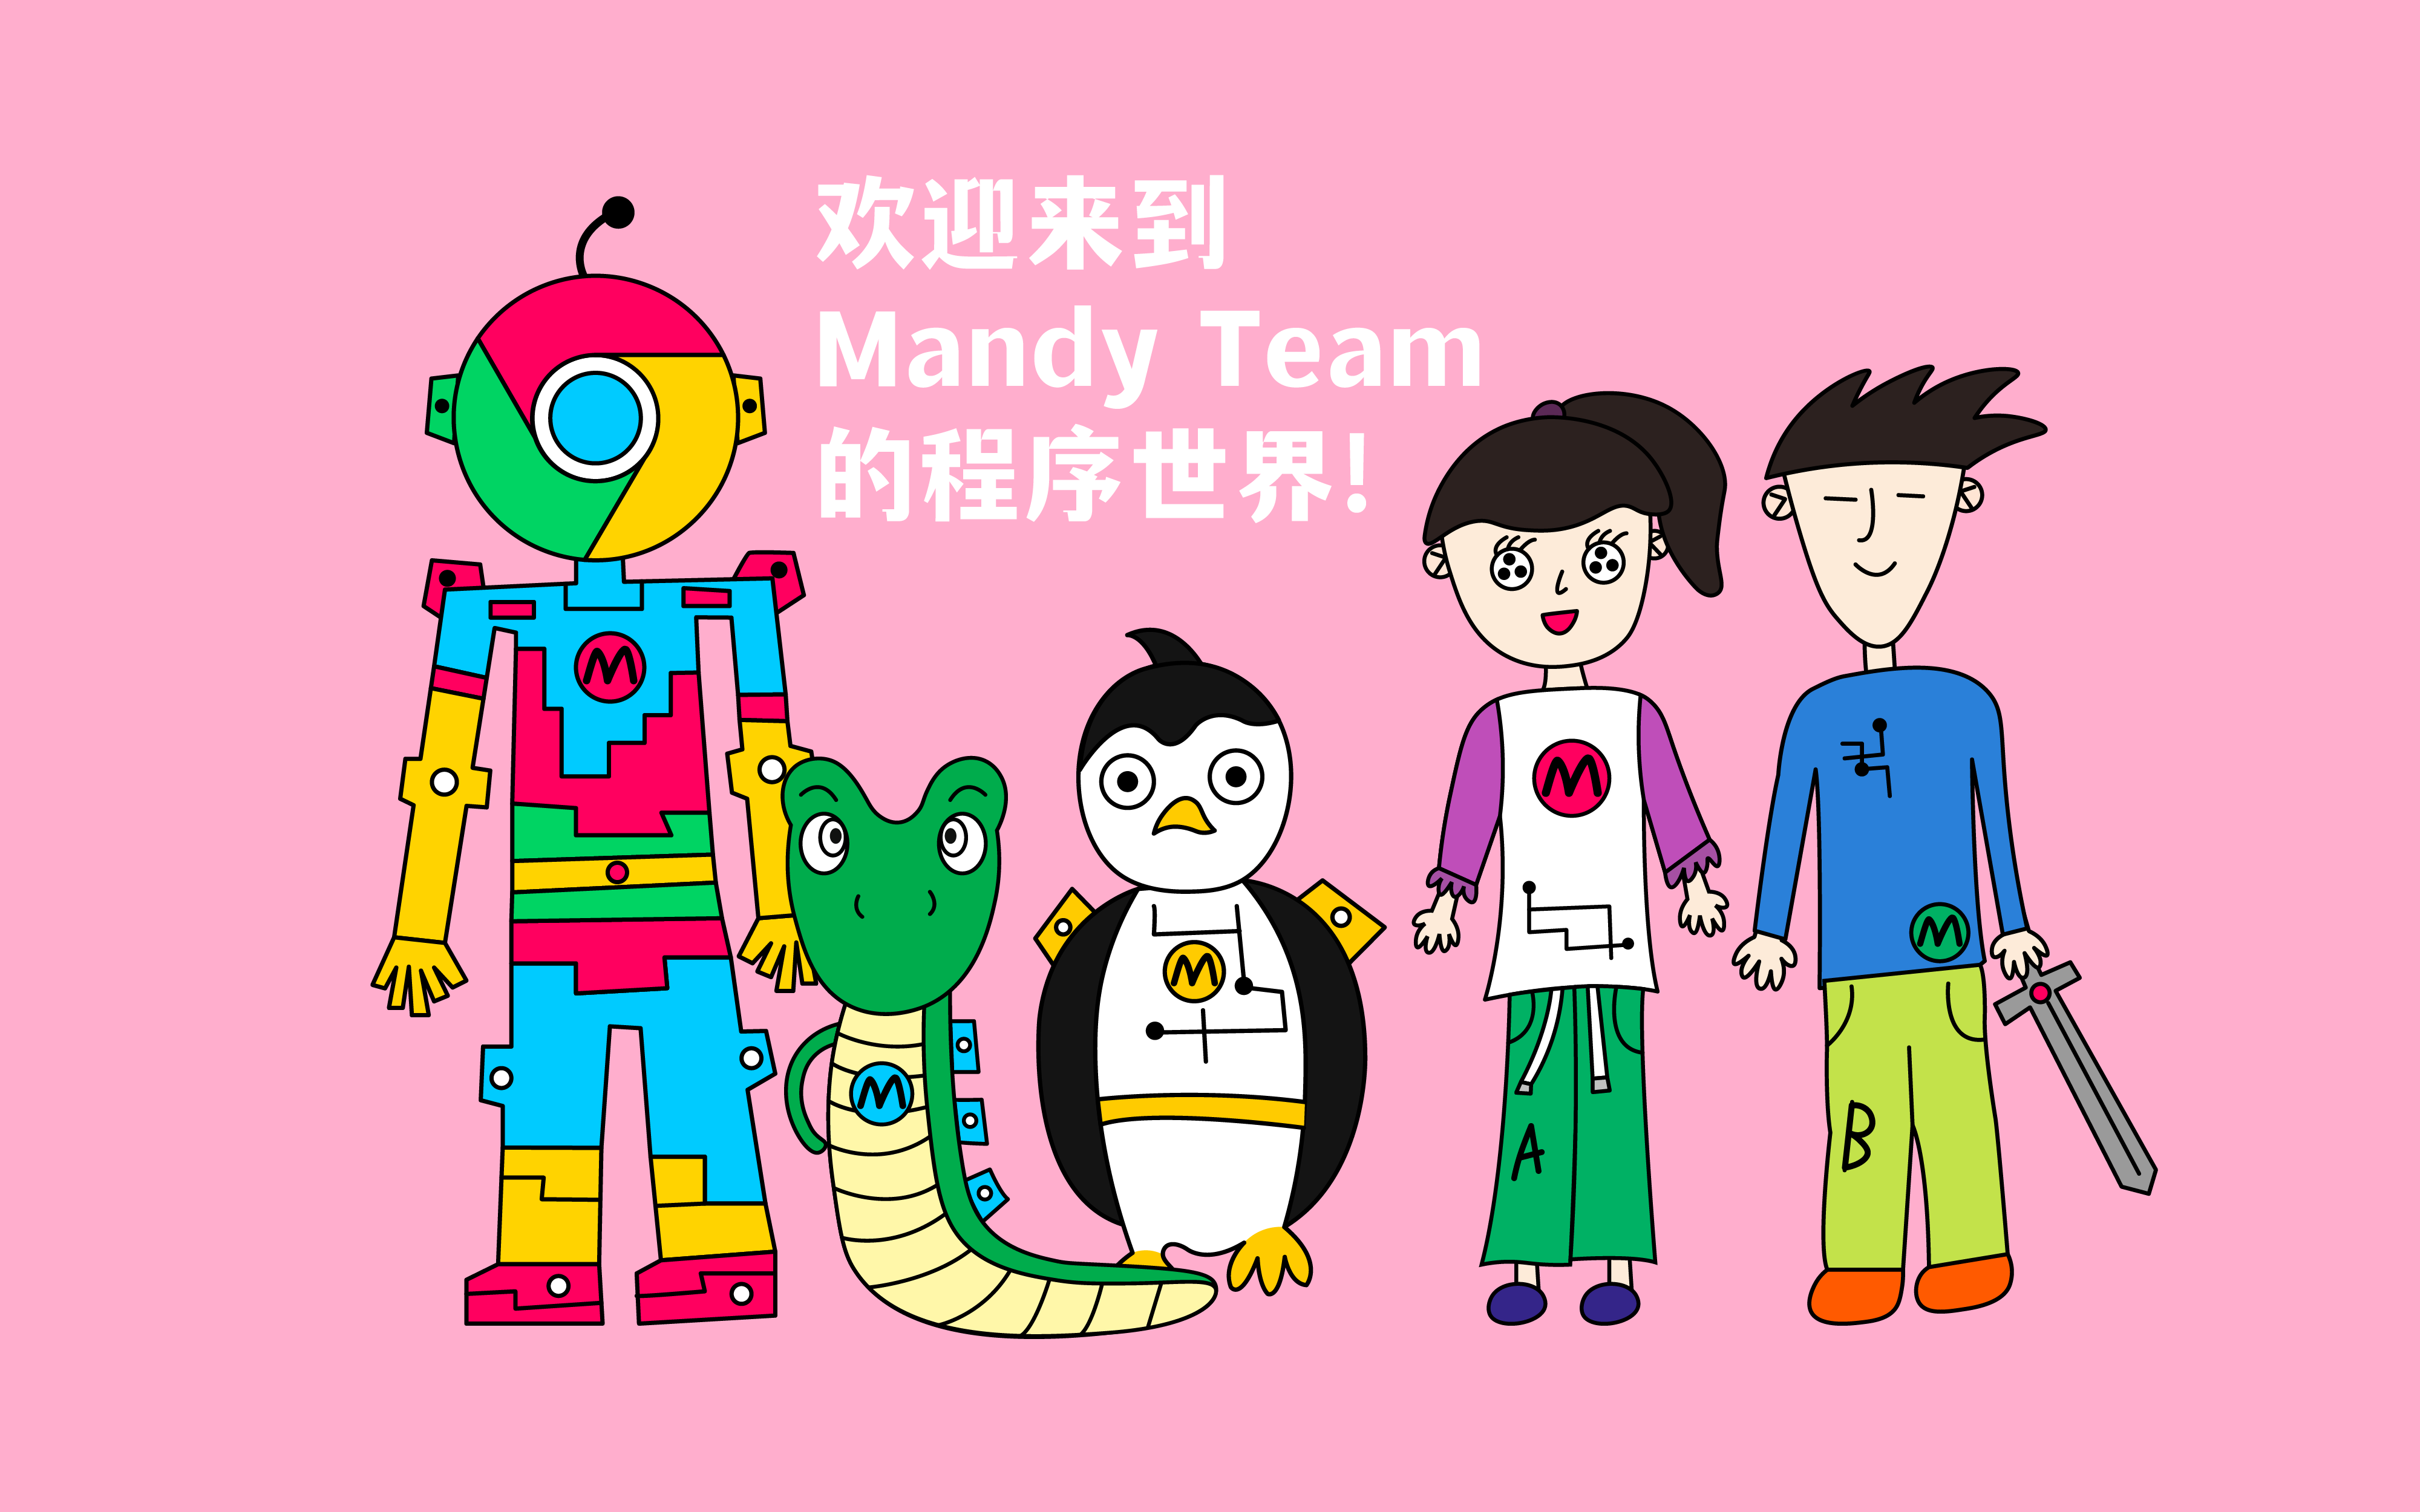 Mandy Team